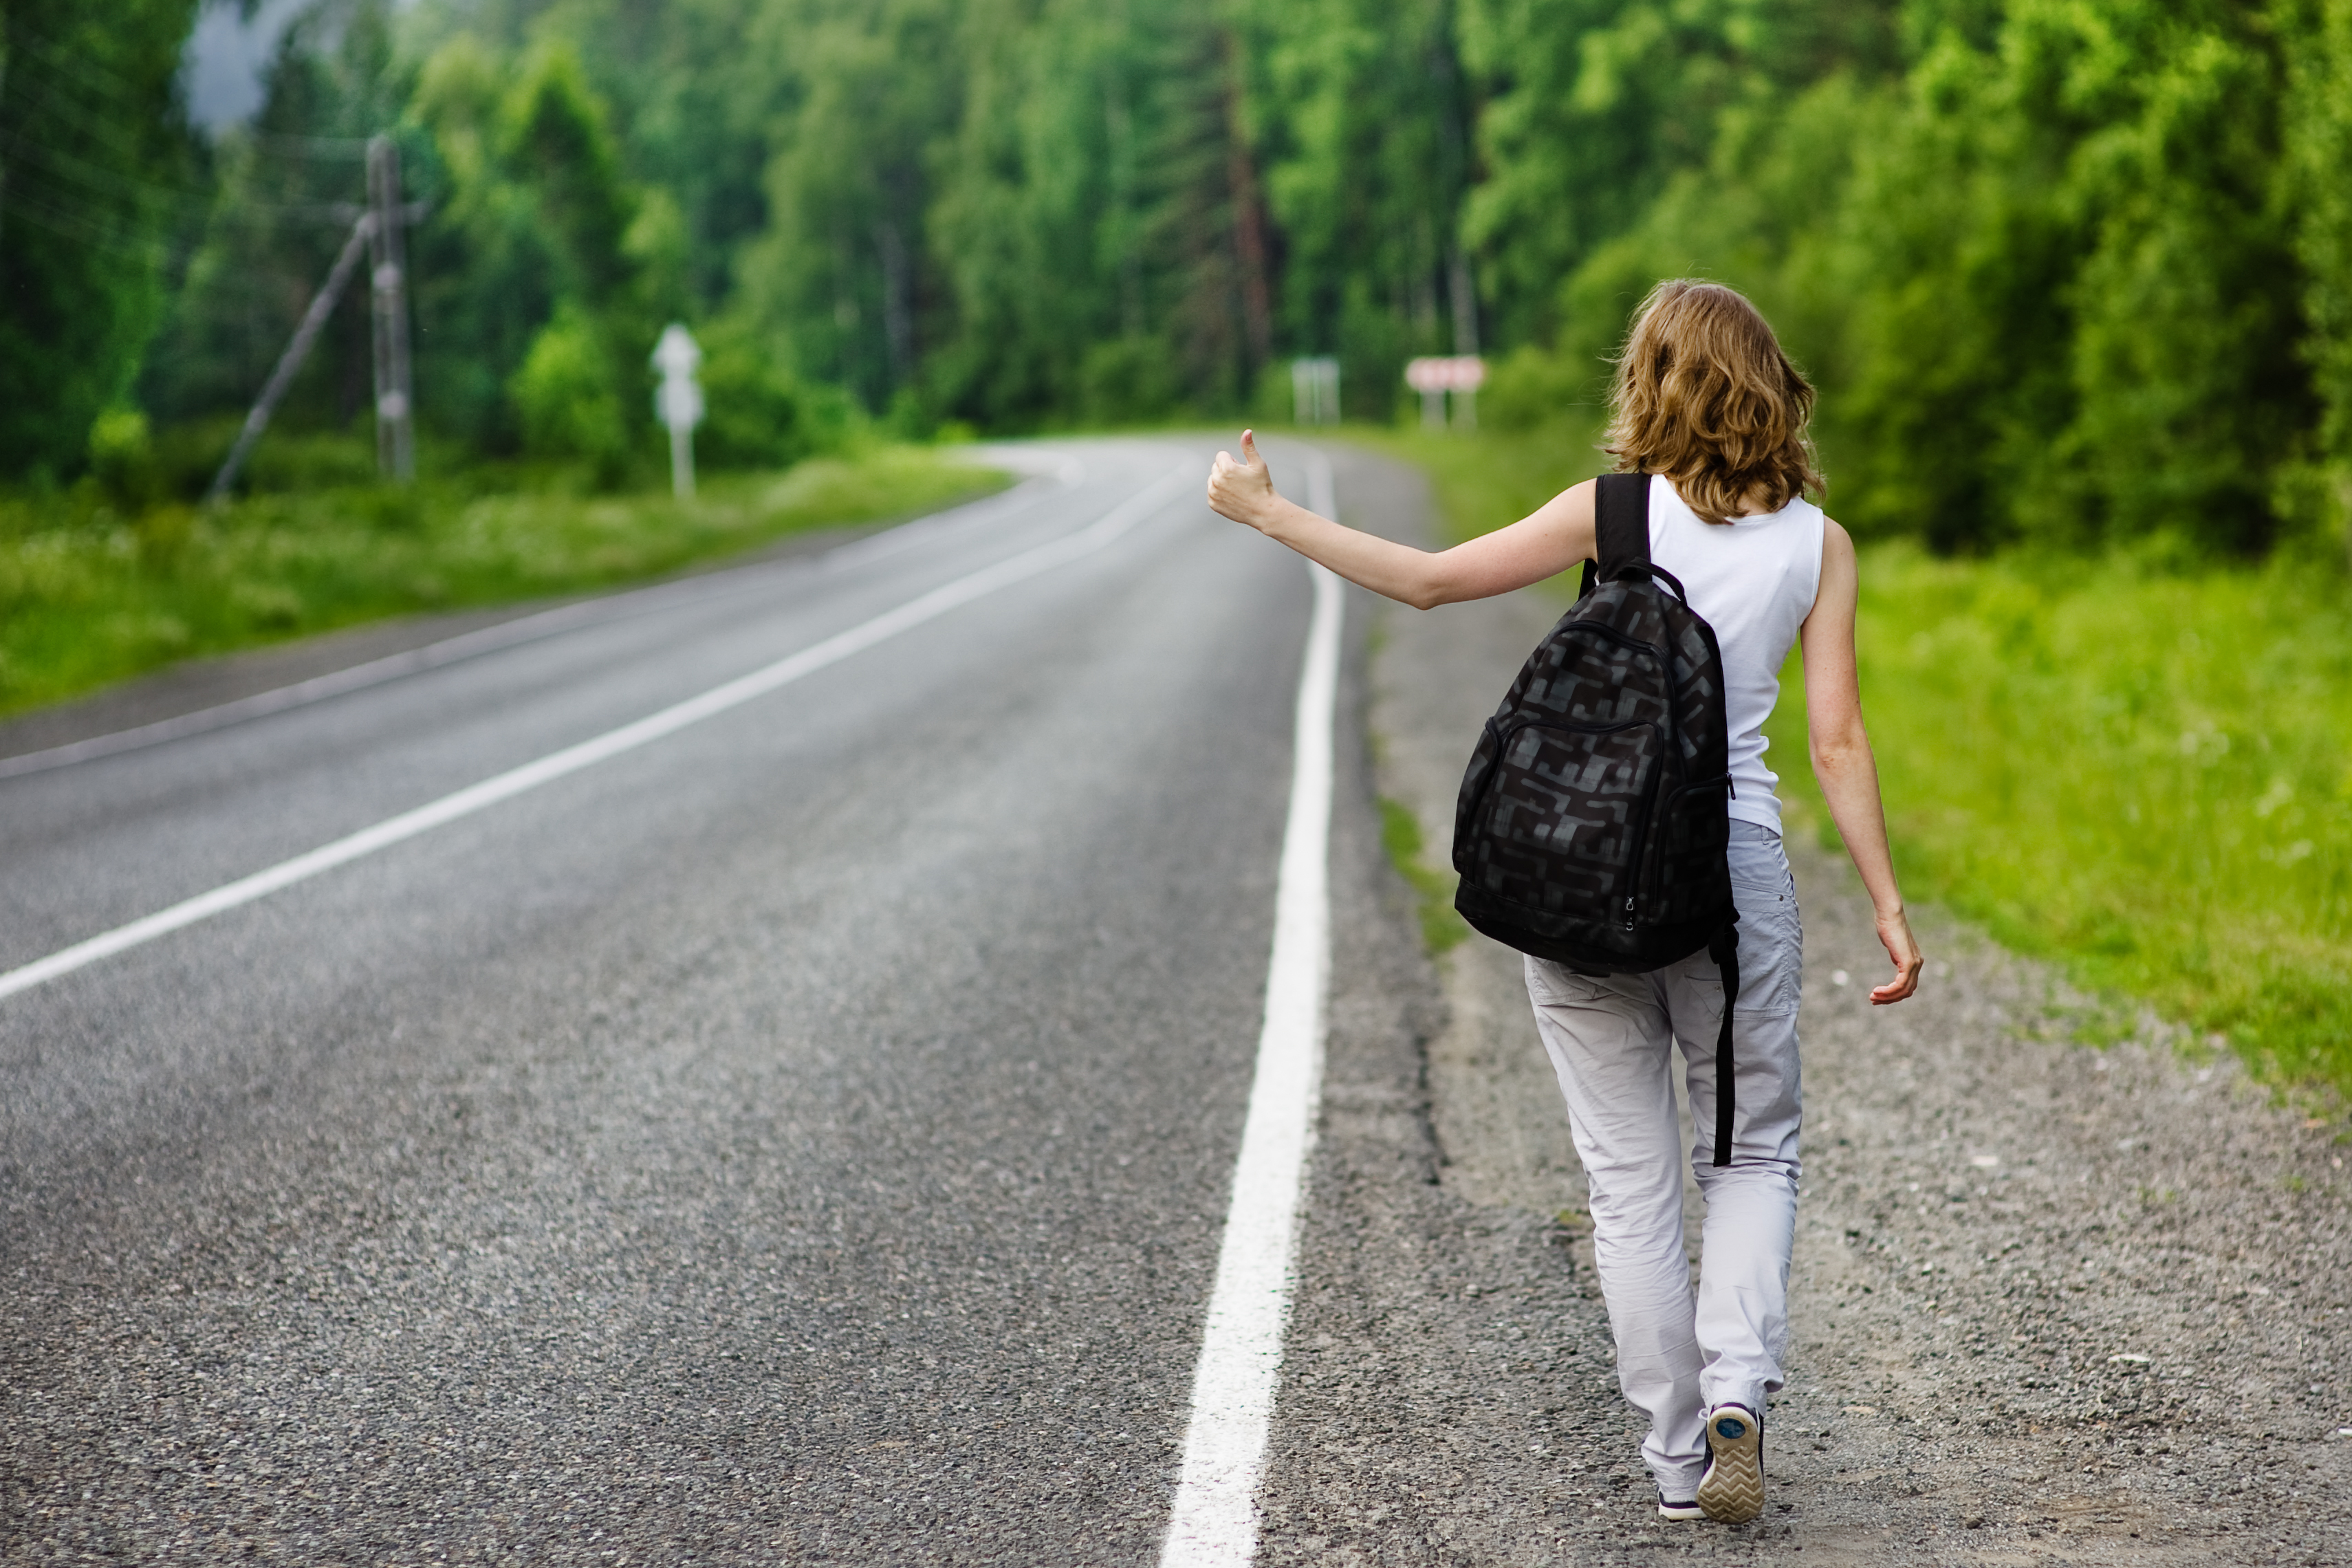 Young girl hitchhiking | Source: Shutterstock.com